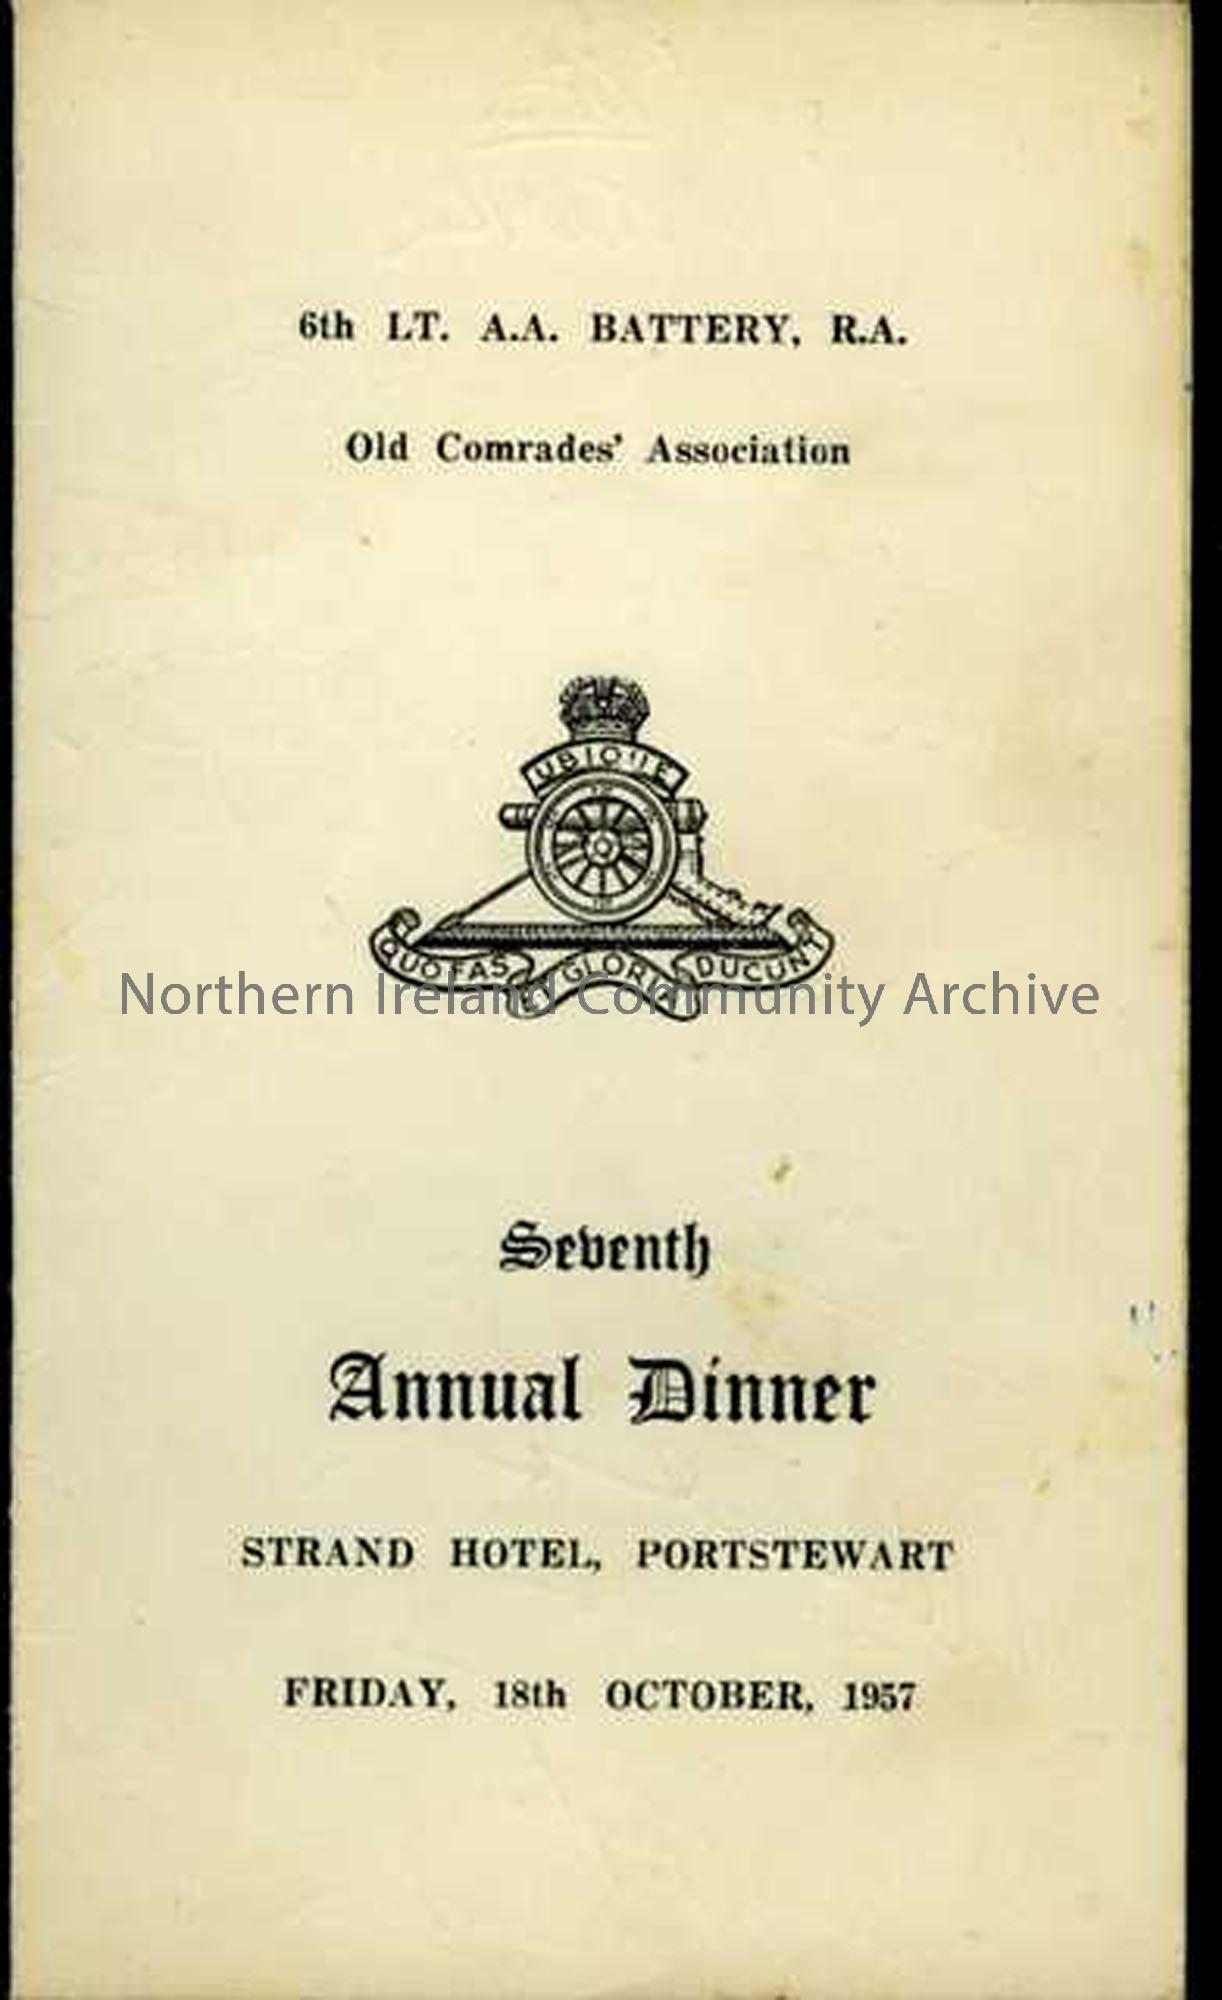 7th Annual dinner leaflet